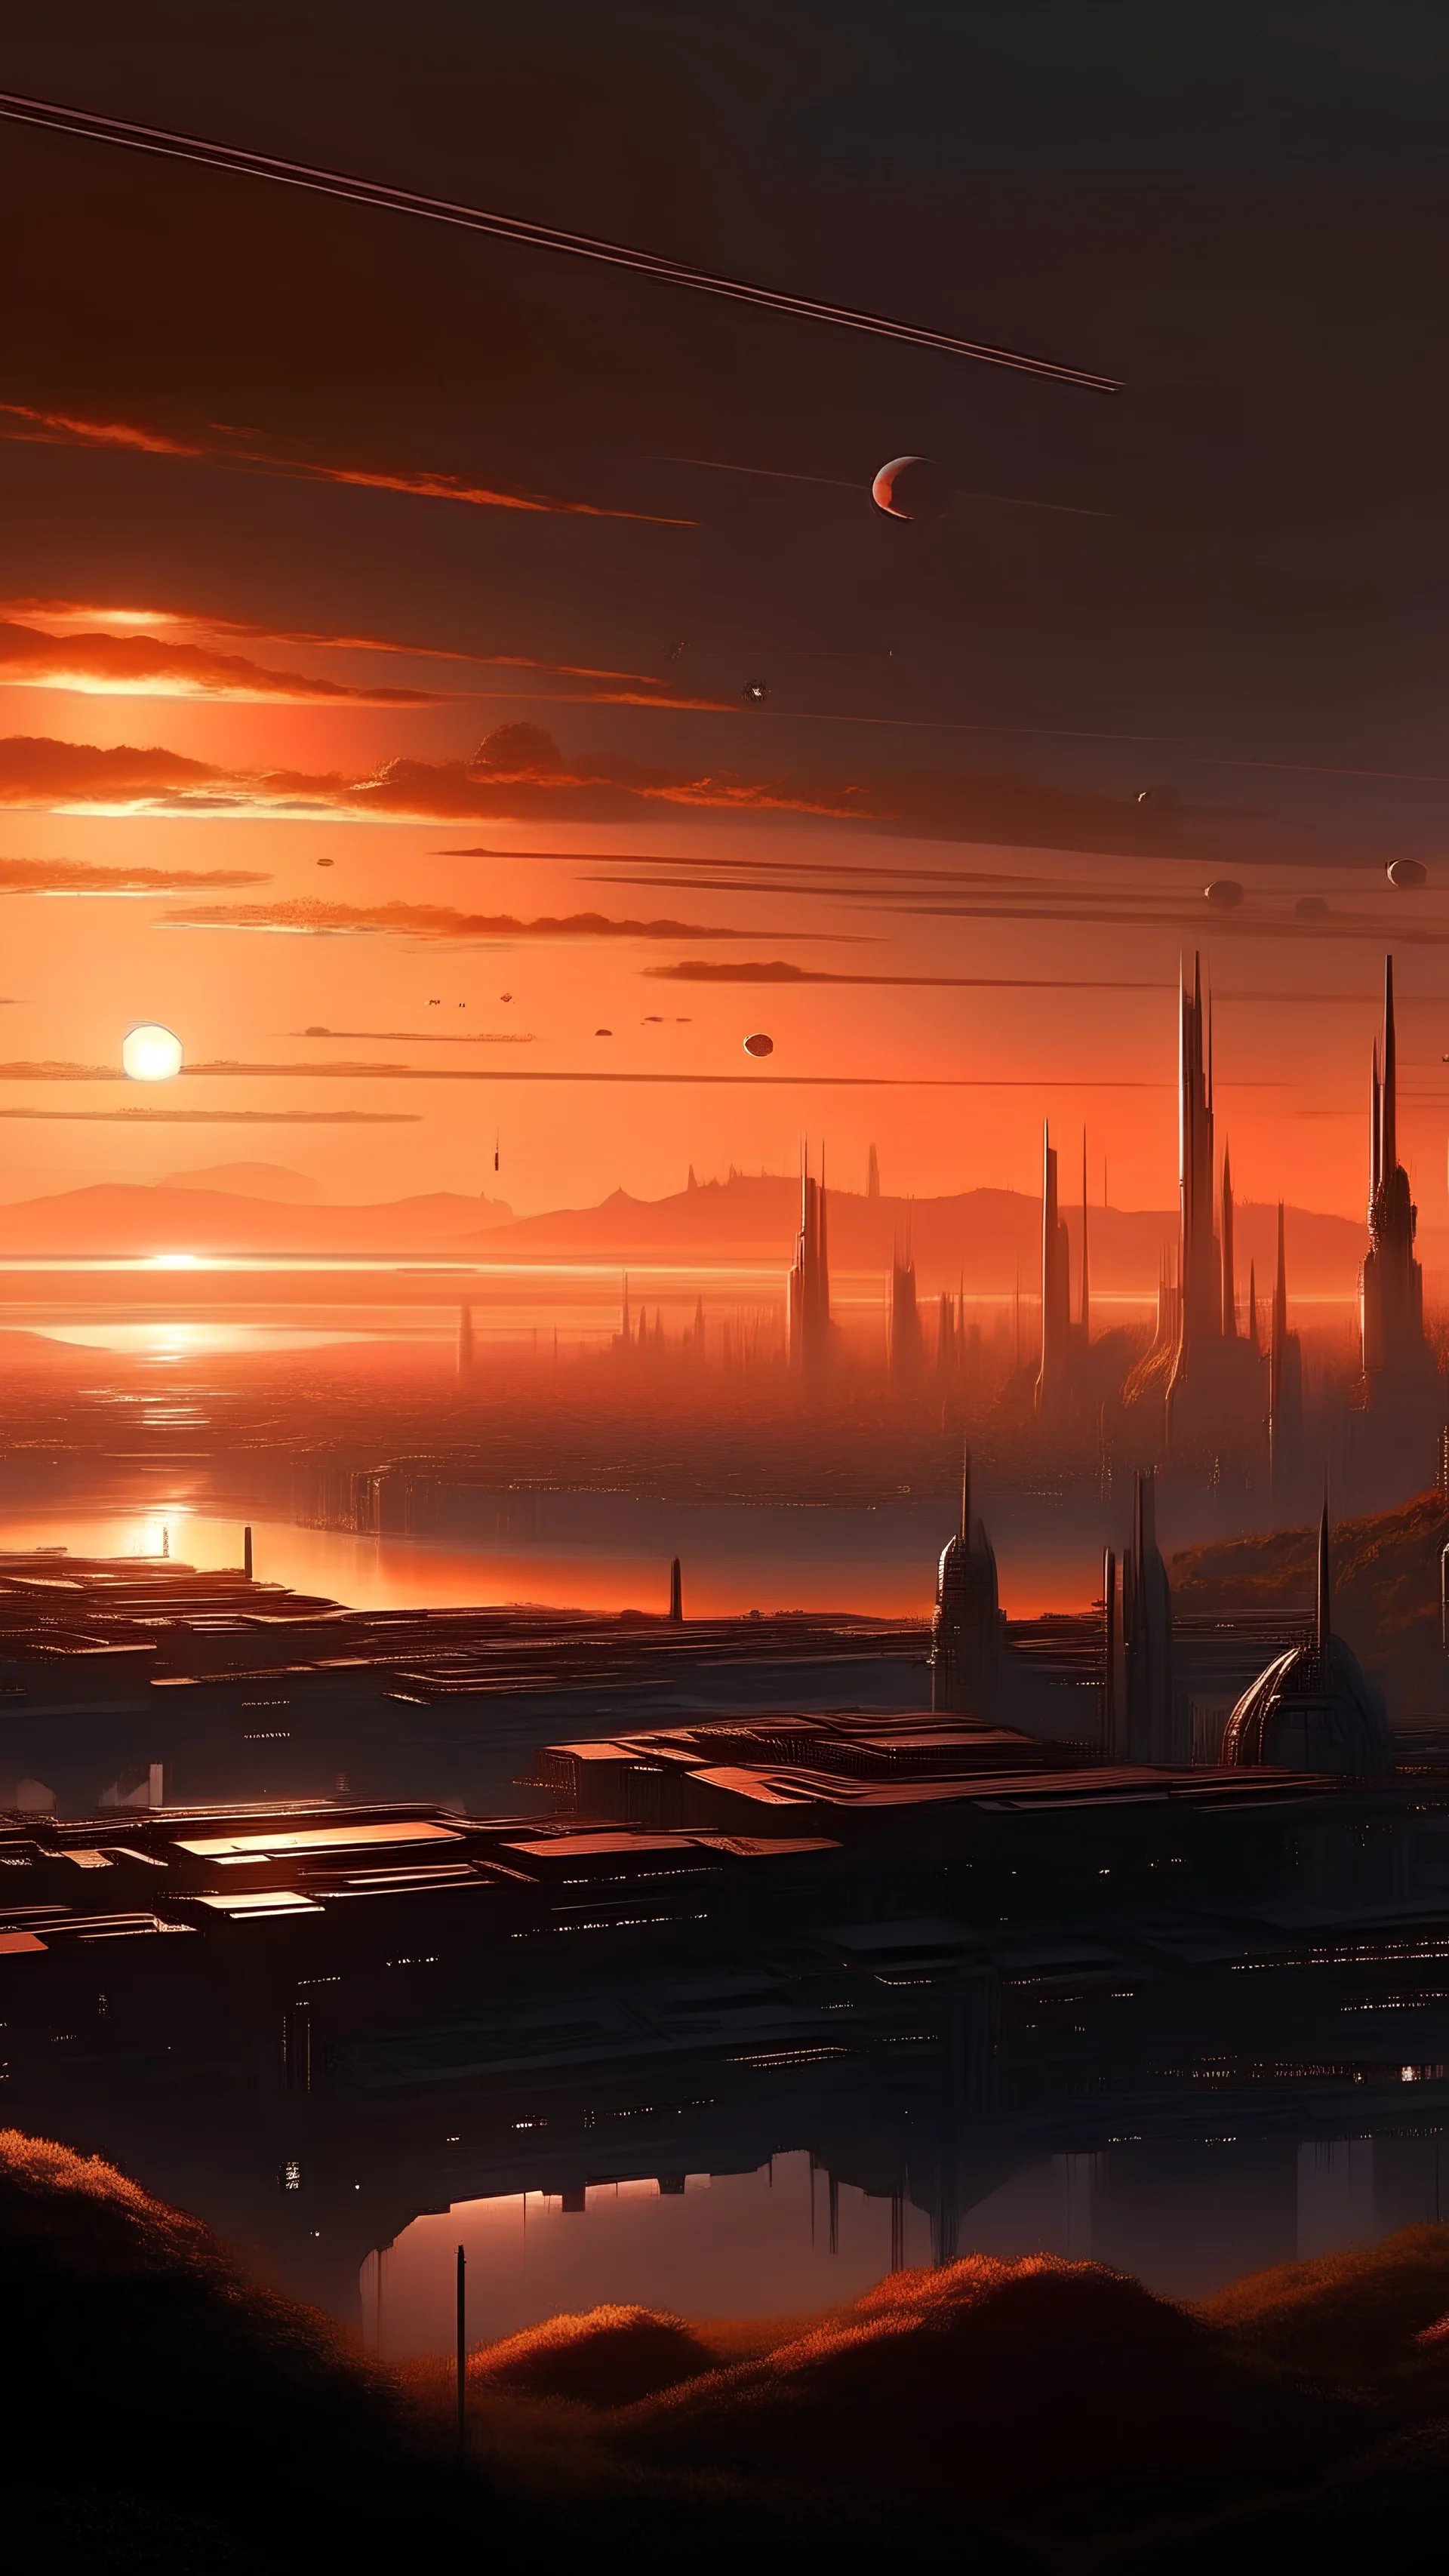 sci fi city, star wars inspired city, sunset